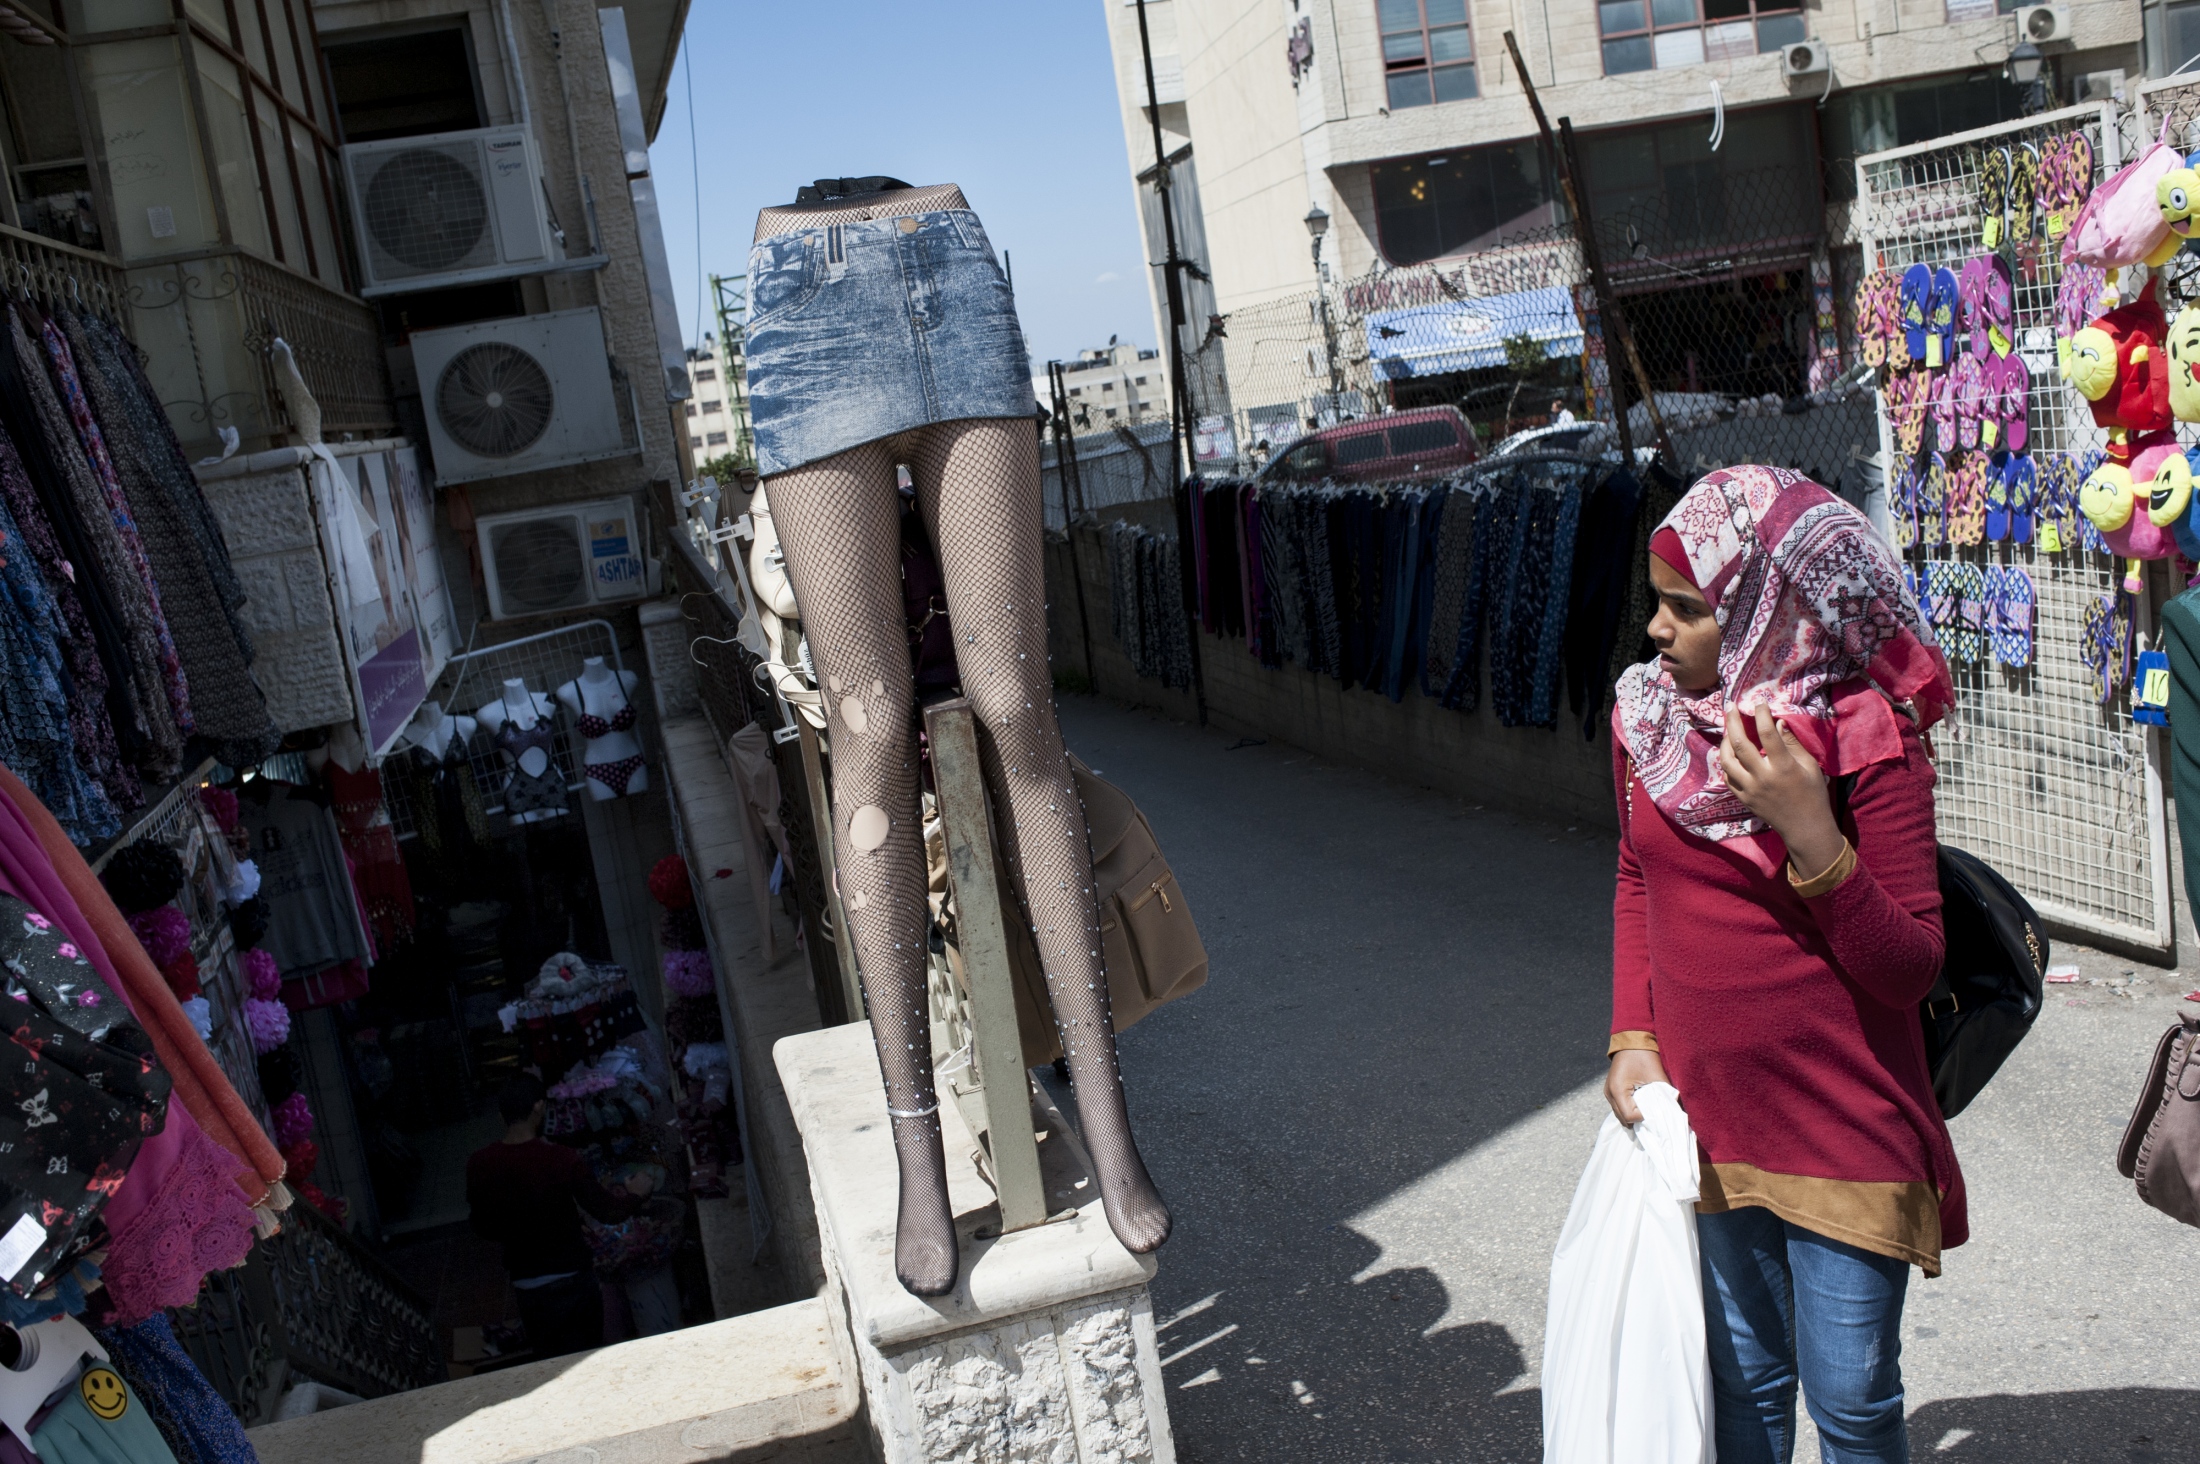 Ramallah Economy Wrap - 